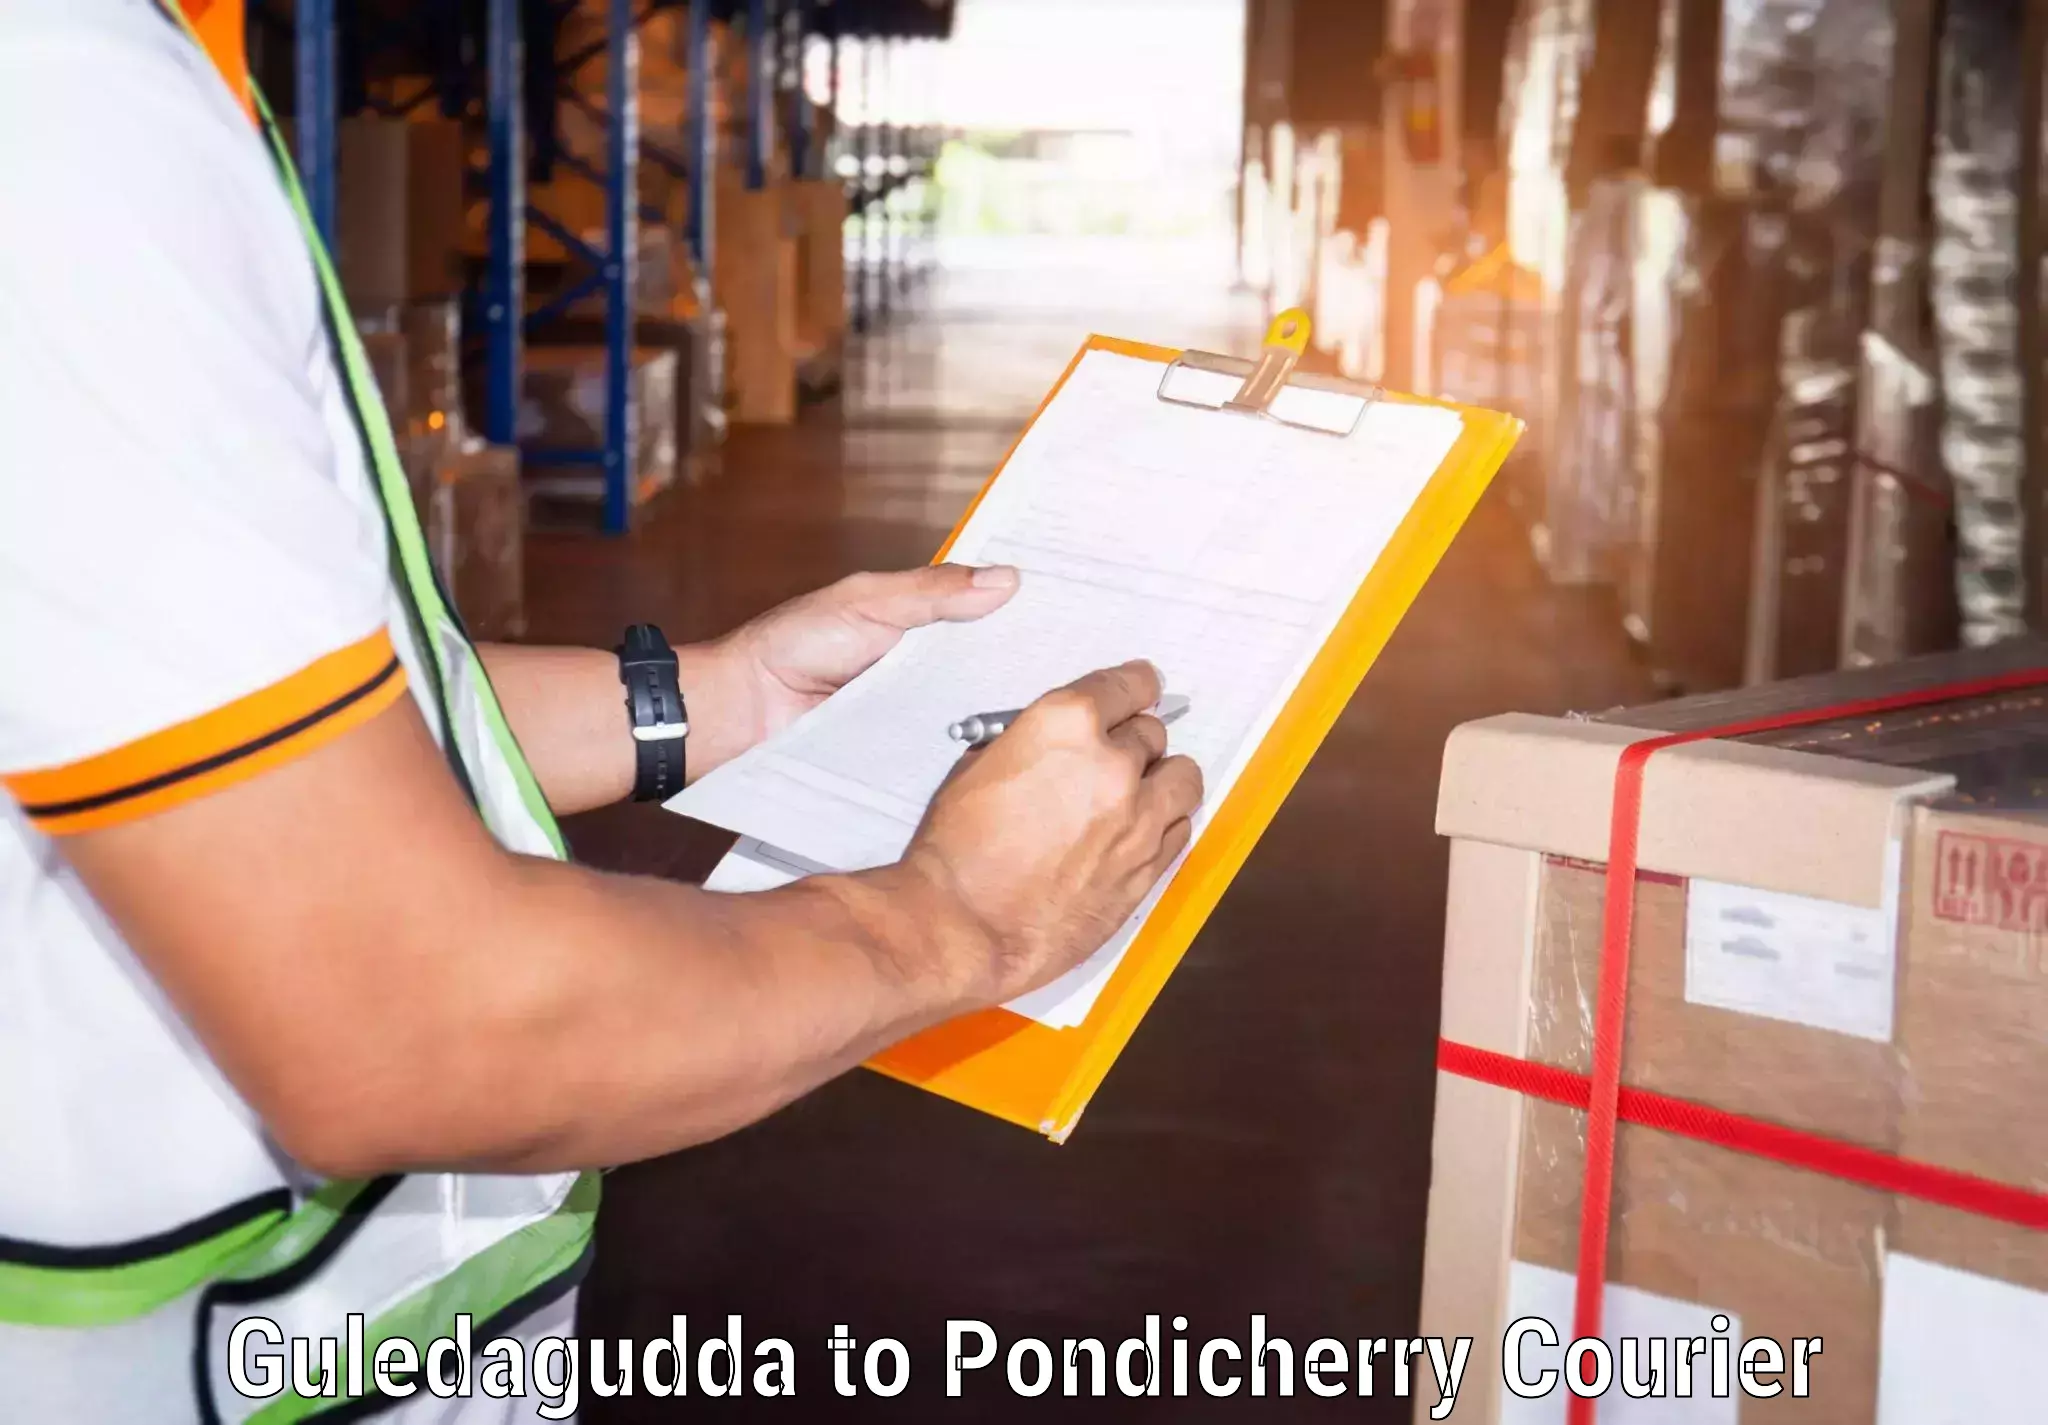 Smart logistics strategies Guledagudda to Pondicherry